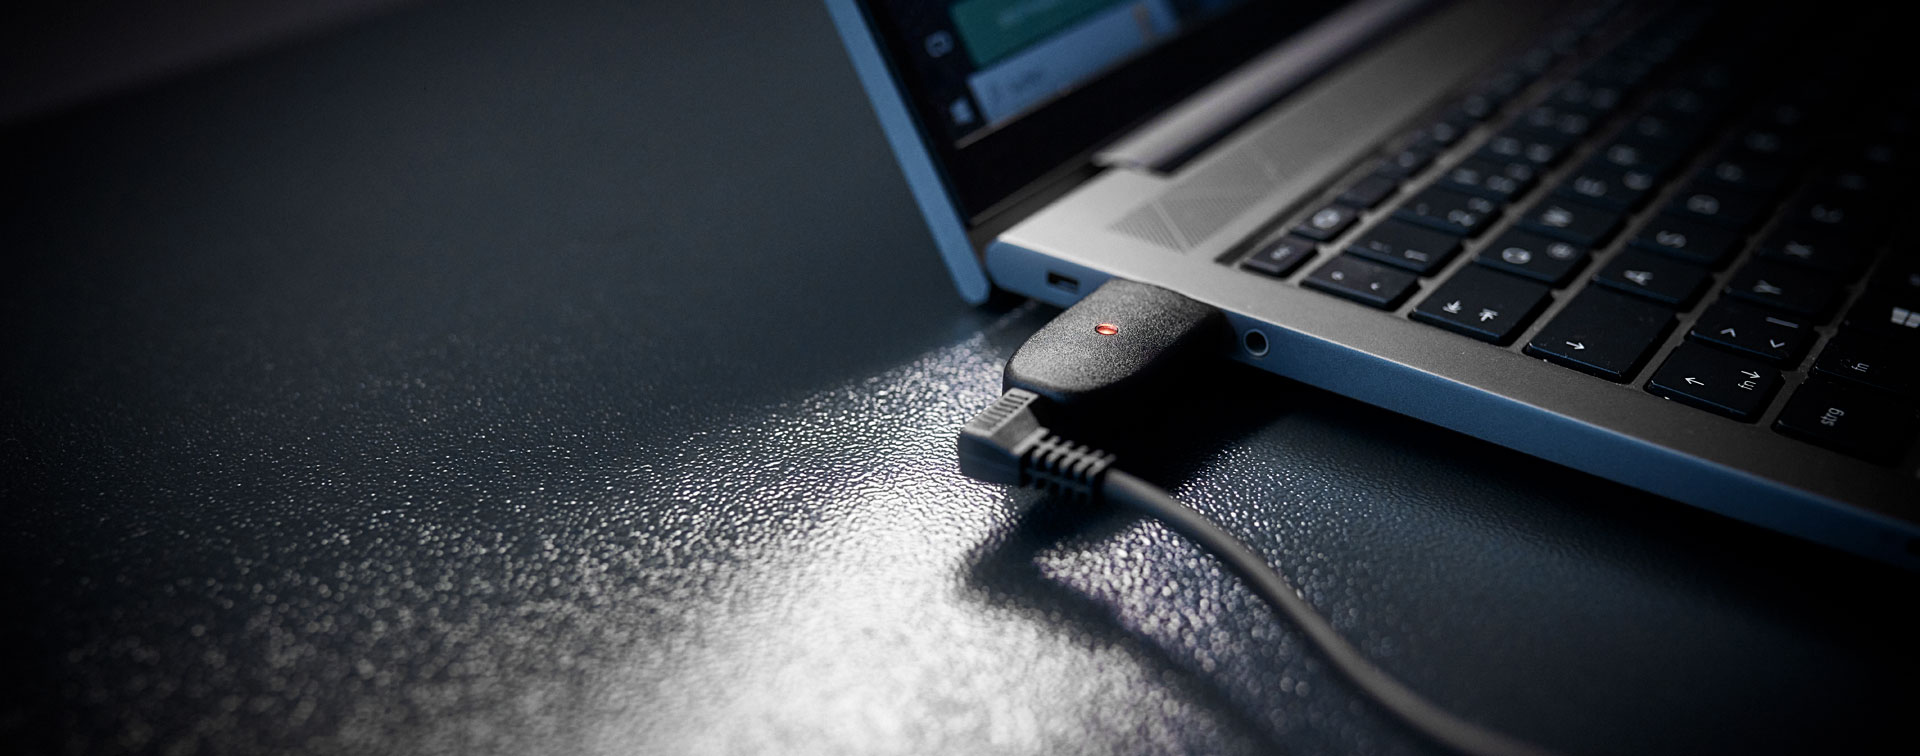 USB Adapter im PC